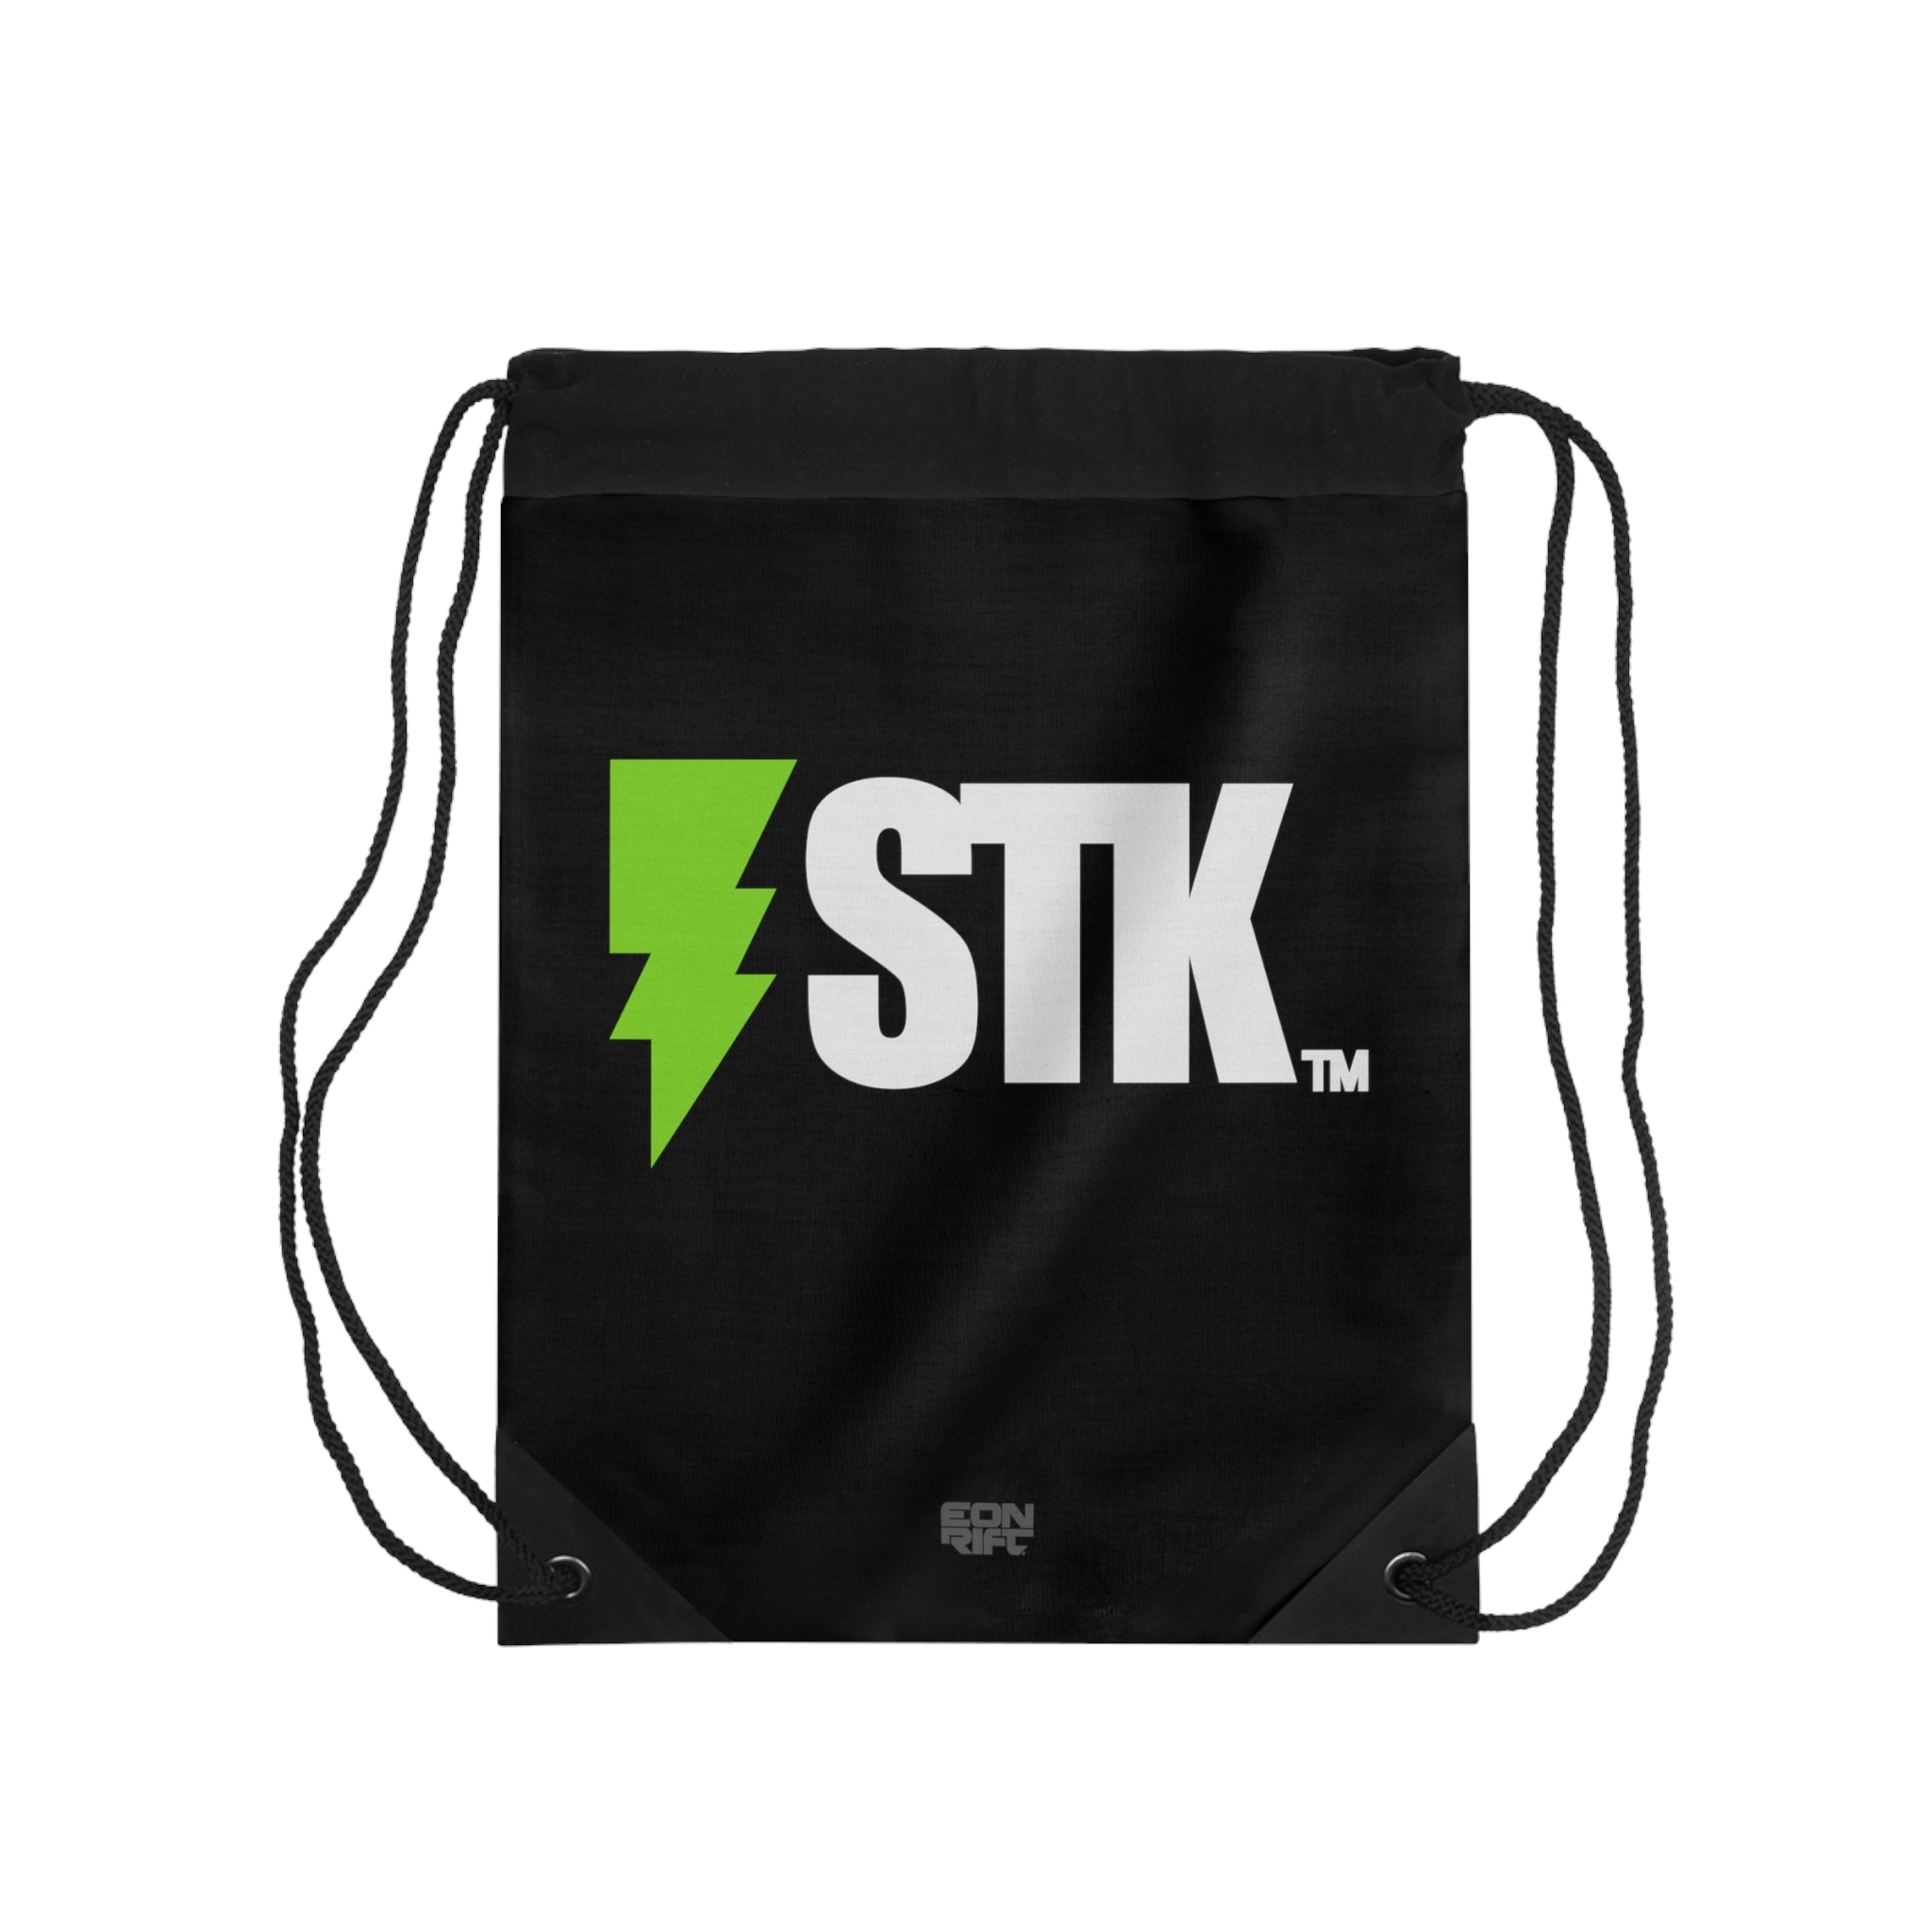 STK | Drawstring Bag